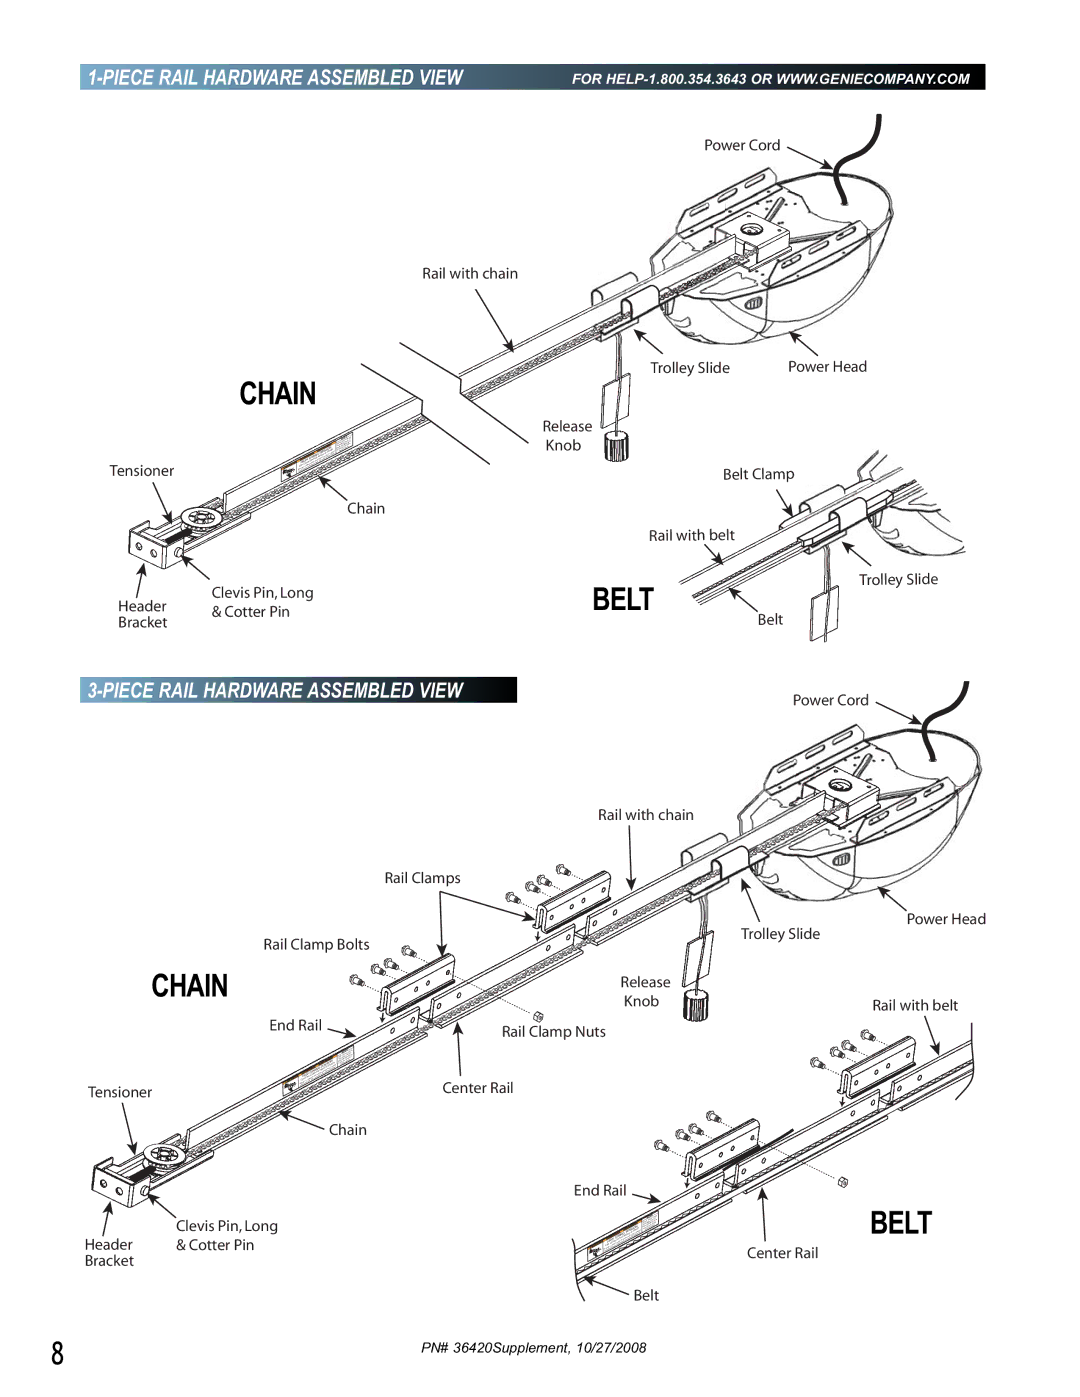 Genie 1042 manual Chain, Piece Rail Hardware Assembled View 